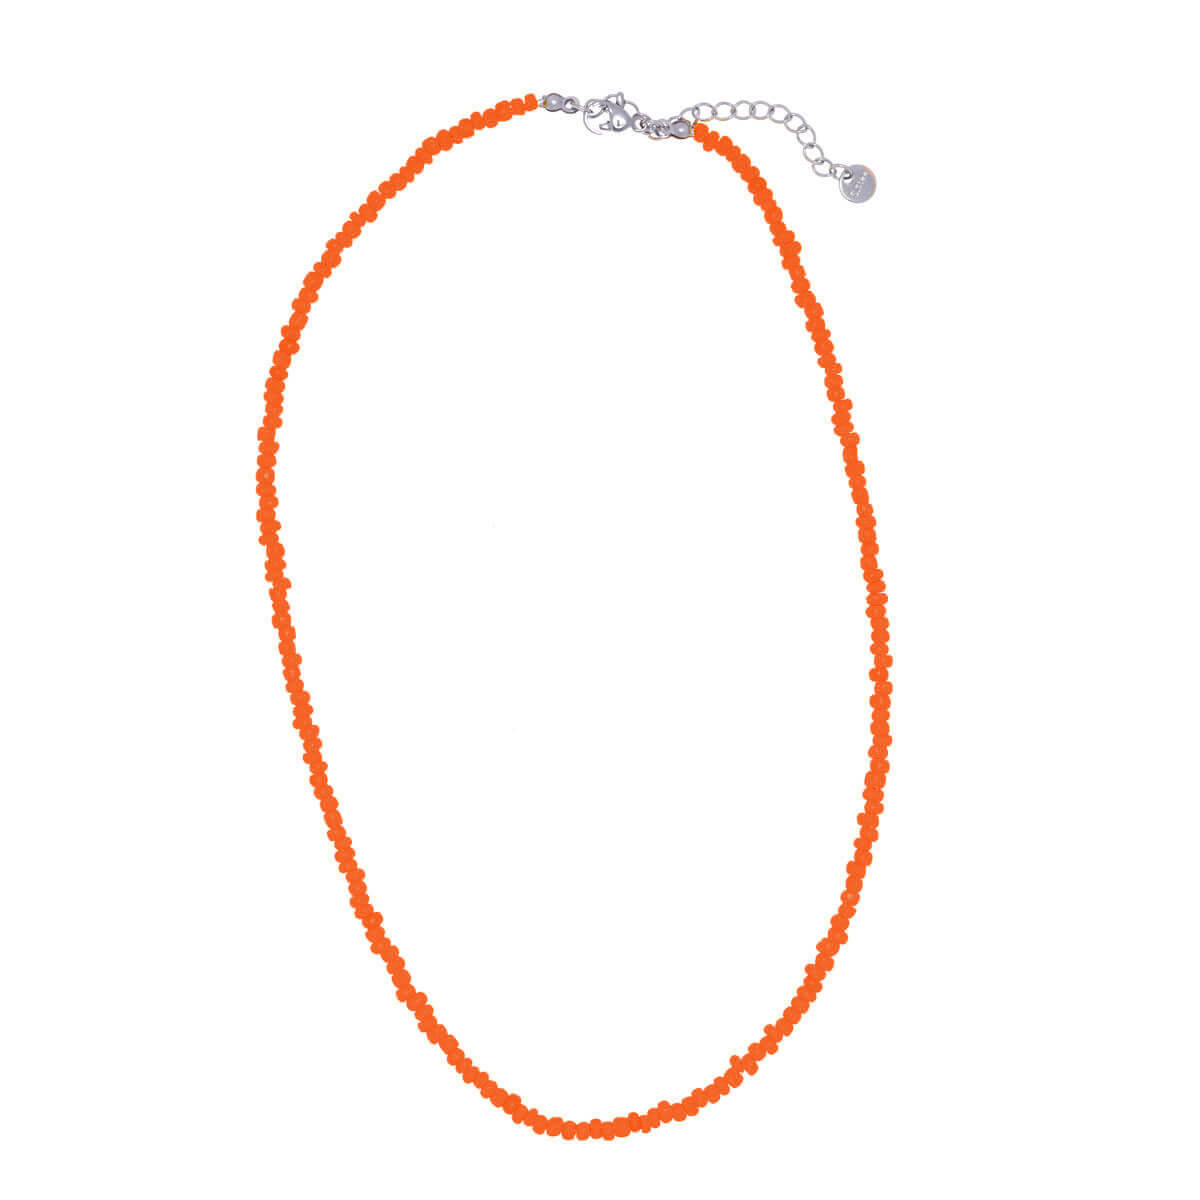 Thin neck beads necklace 40cm +5cm (Steel 316L)